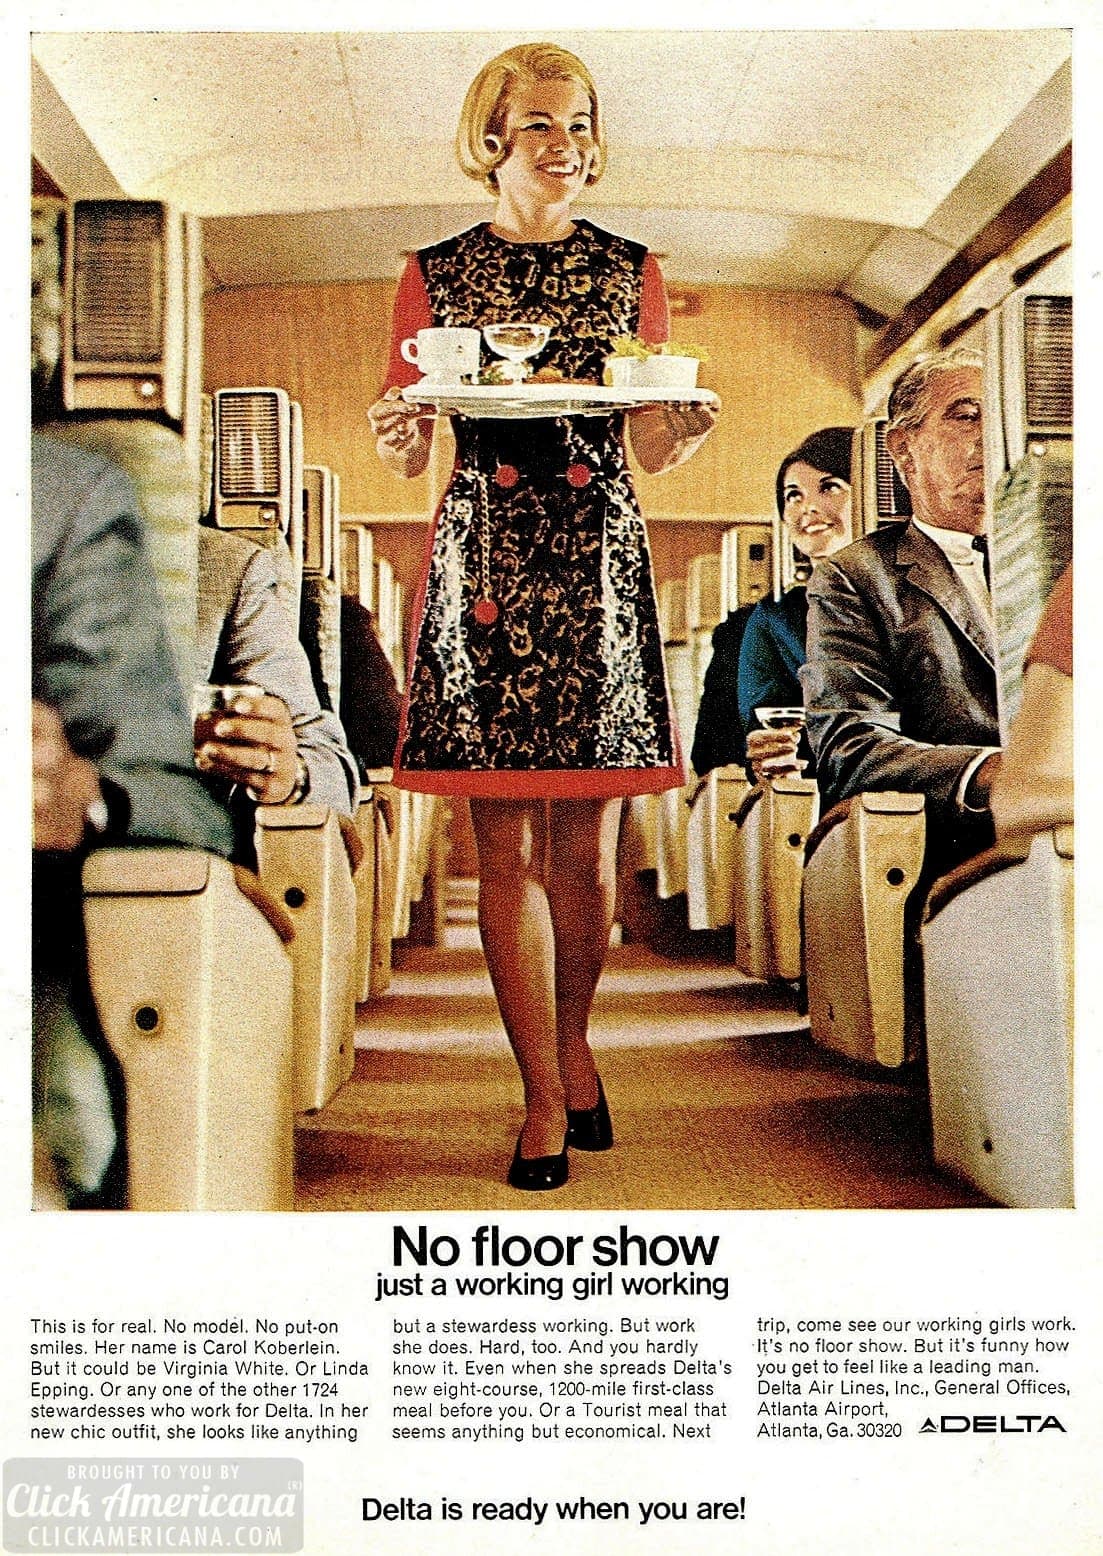 Delta-Airlines-vintage-1960s-1970s.jpg